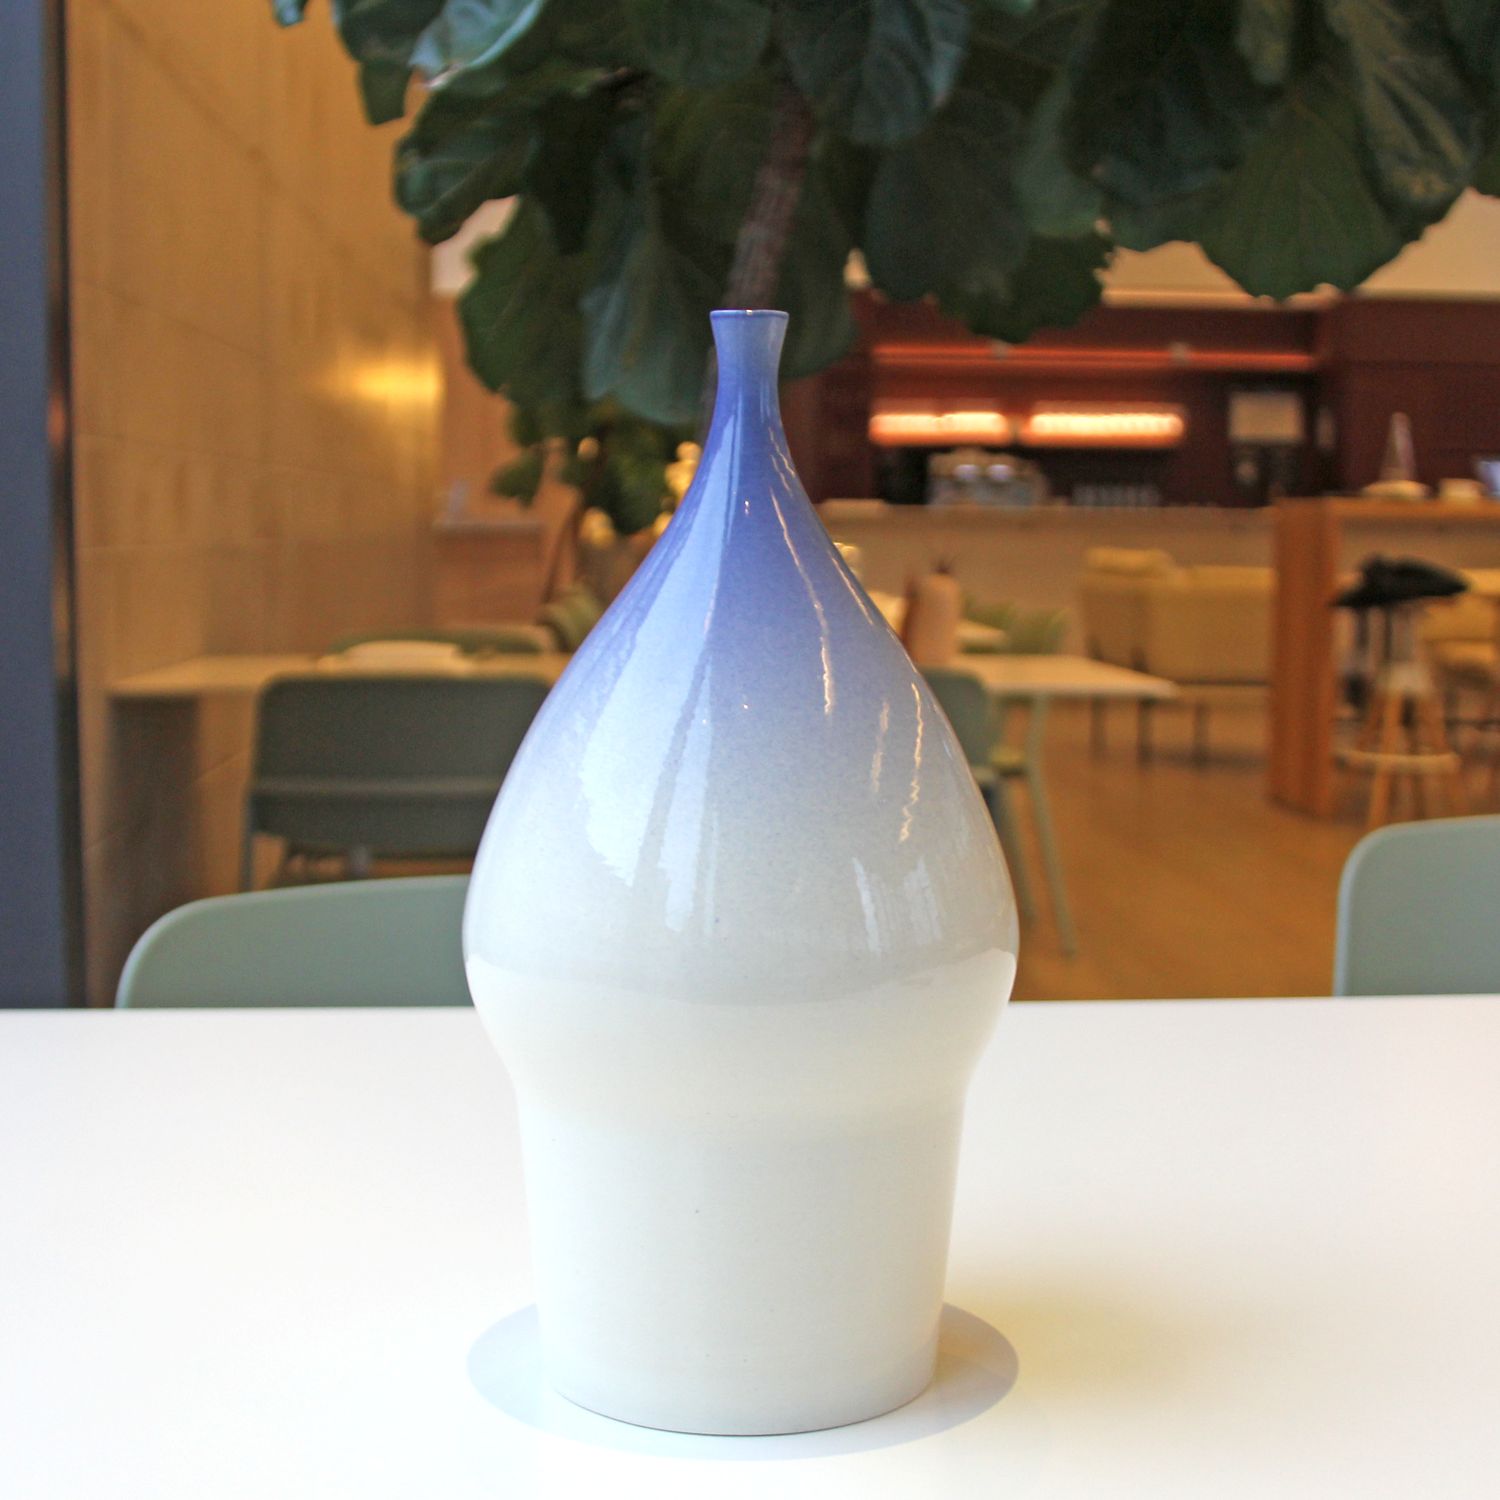 Annika Hoefs: Large Gradiant Vase Product Image 1 of 2